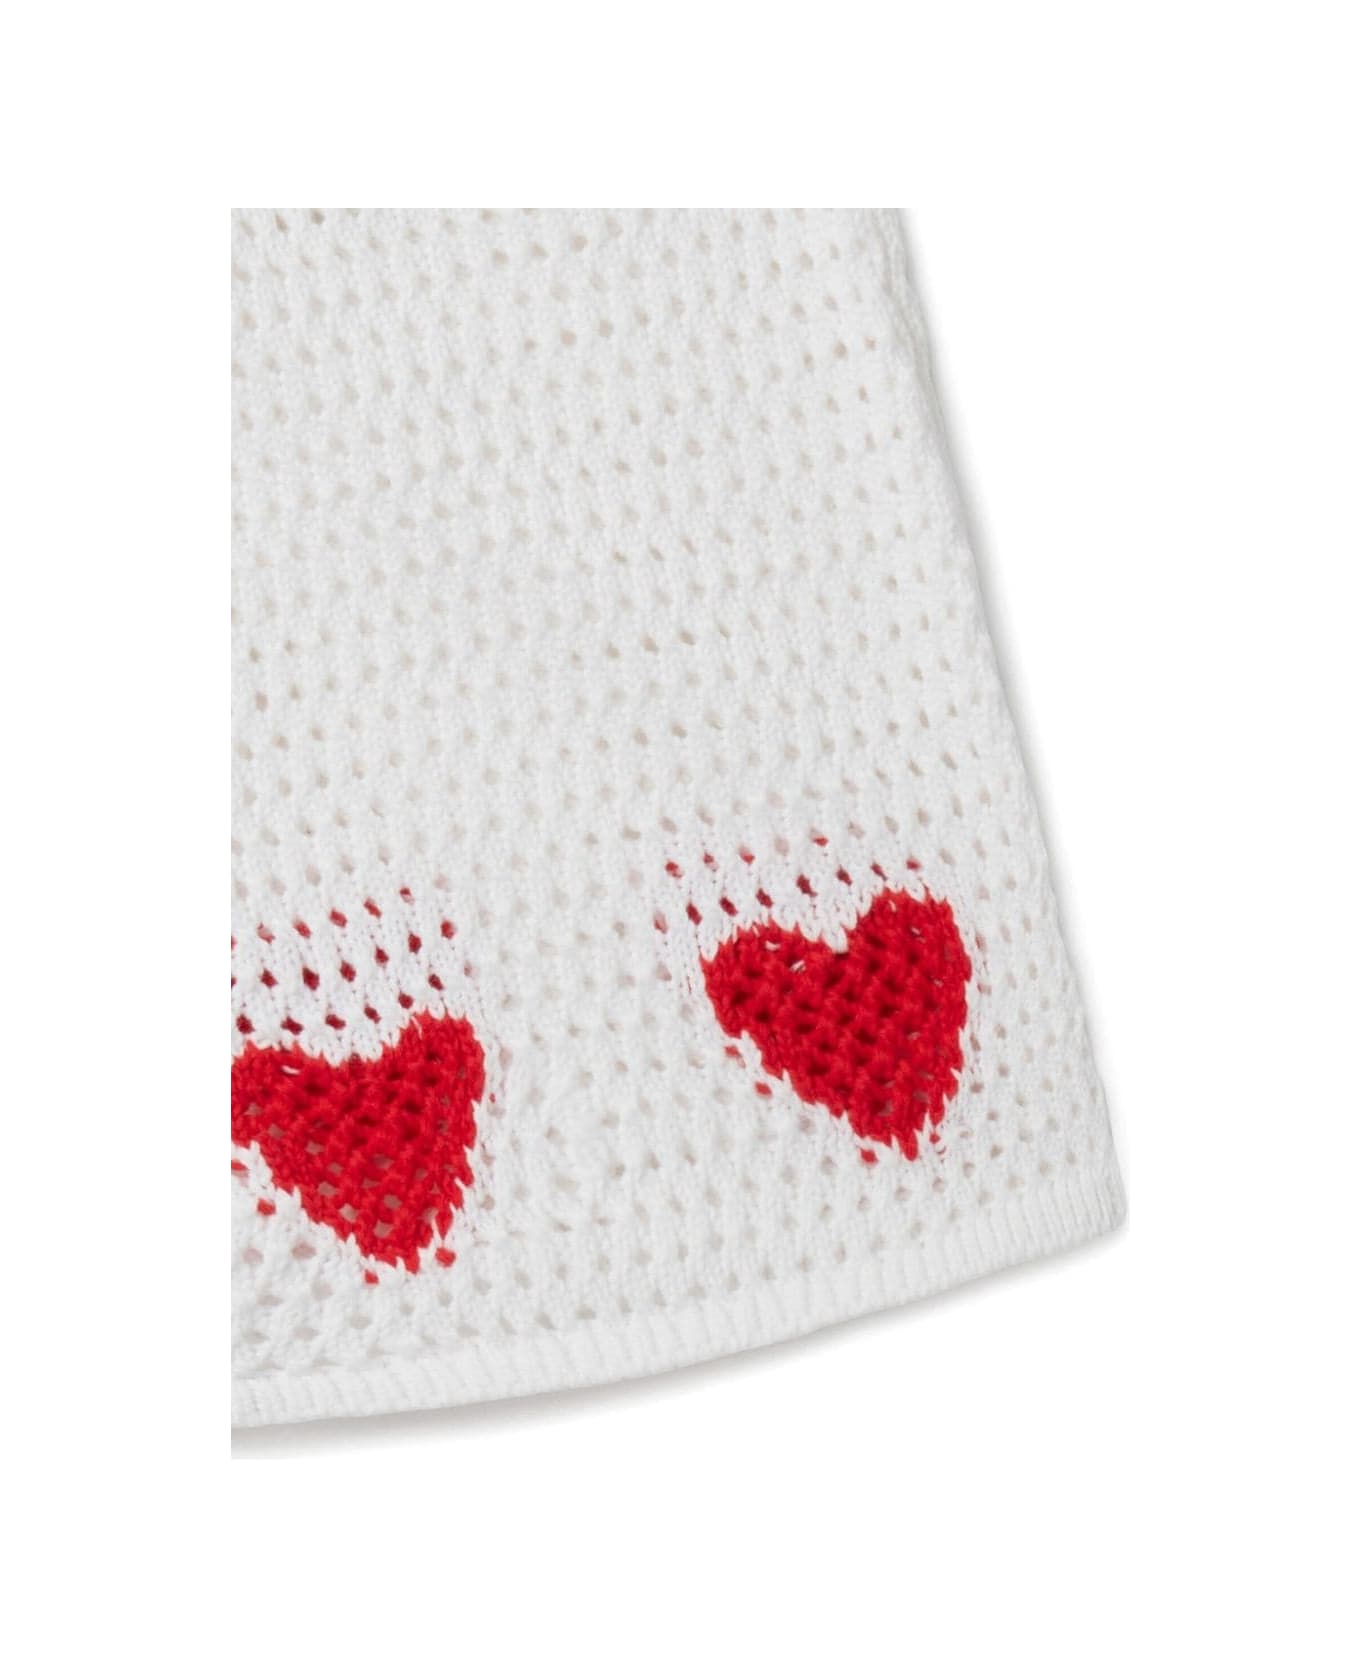 Stella McCartney Kids White Crochet Shorts With Red Hearts - White